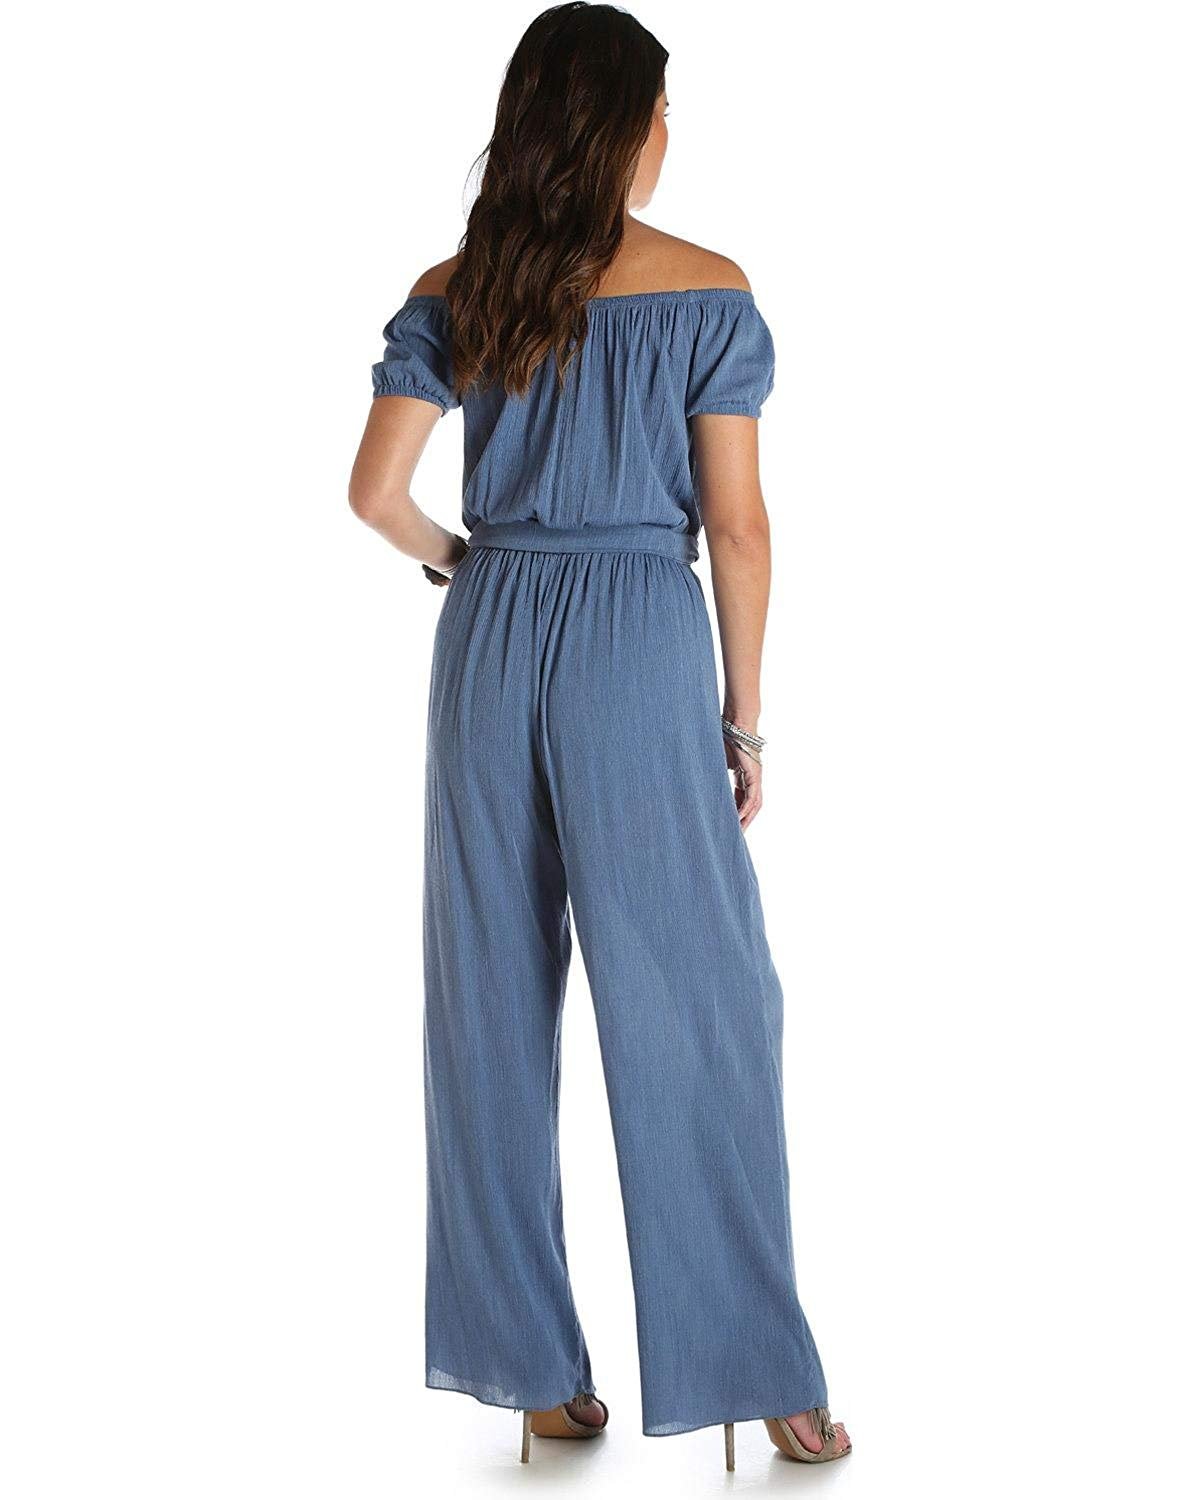 Wrangler Women's Blue Denim Wide Leg Jumpsuit - Lw6812b | eBay